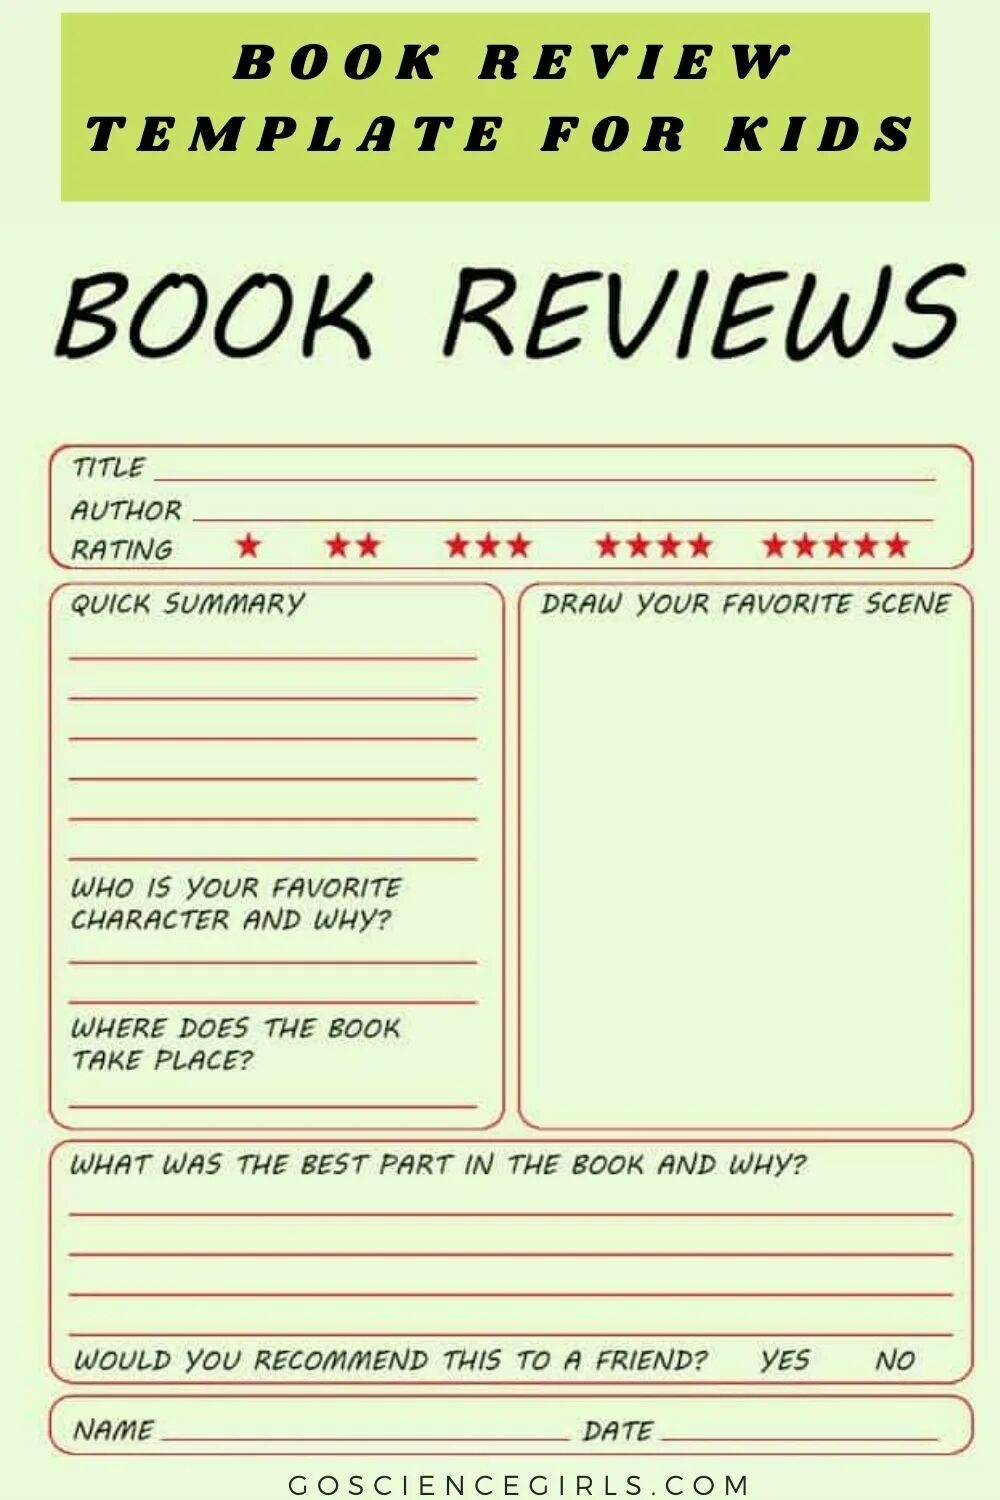 Book Review план. Book Review шаблон. How to write a book Review. Writing a book Review примеры.